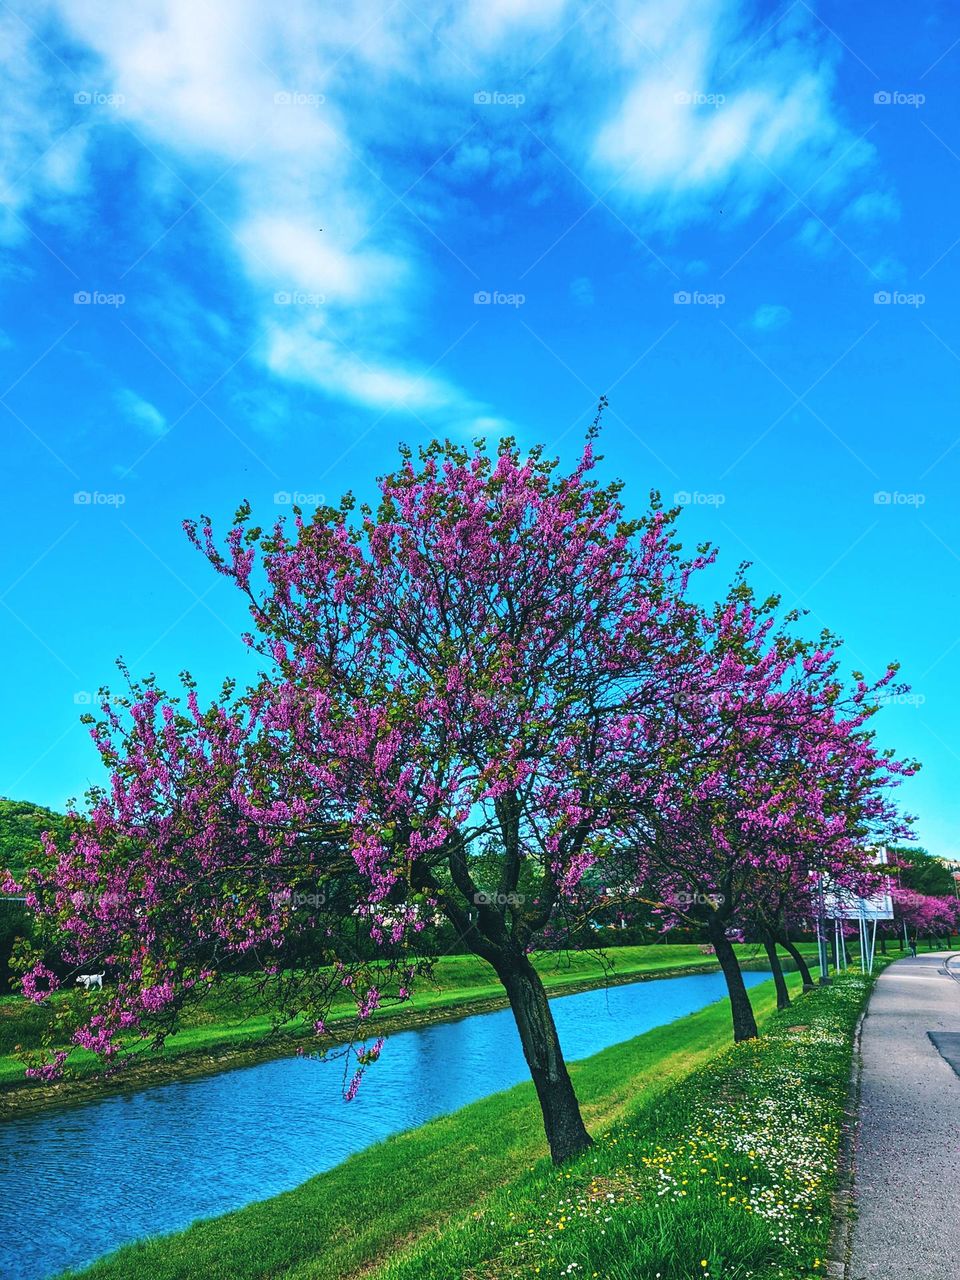 Pink blooming fruit trees in the urban city in spring season against blue sky